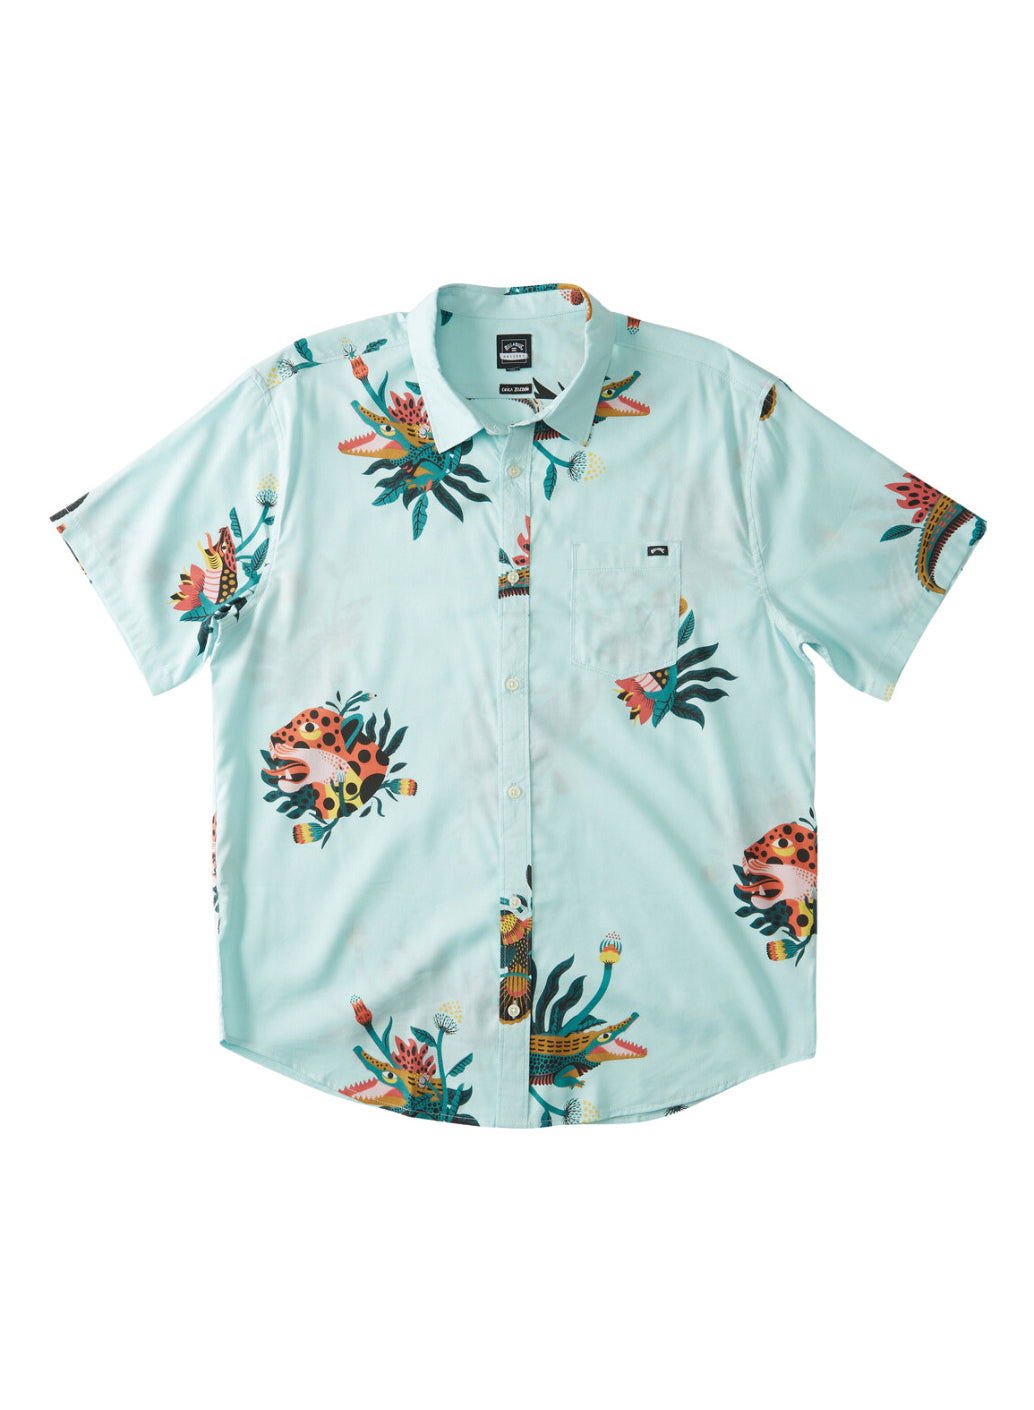 Billabong Zeledon Sundays Short Sleeve Shirt CTL-Coastal L